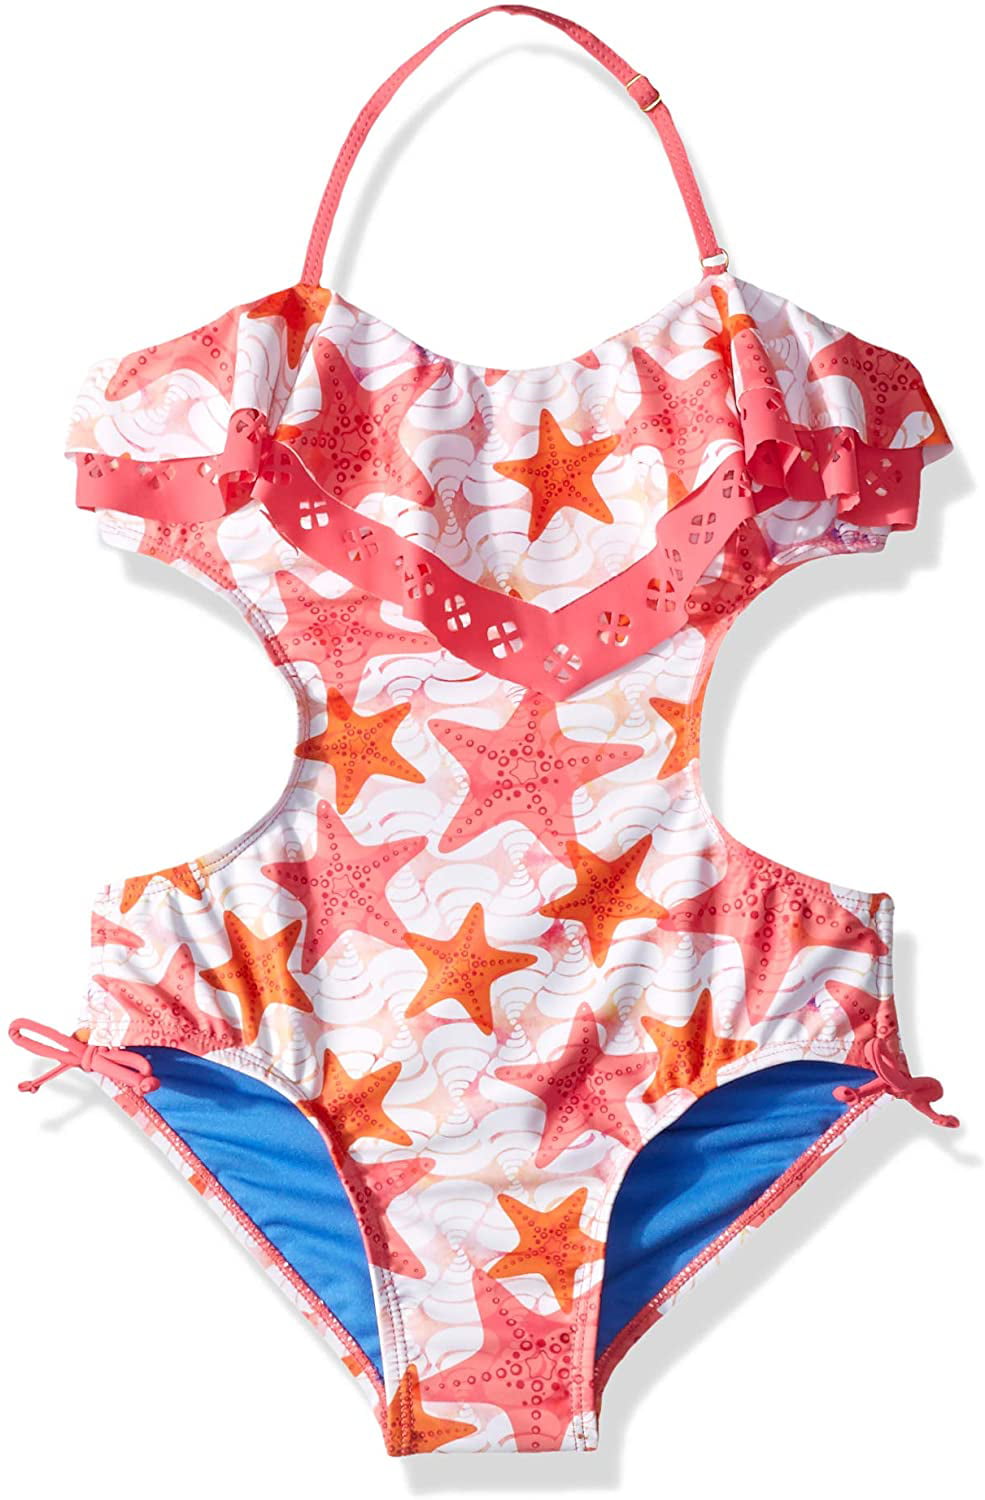 Jessica Simpson Girls' Big One-Piece Swimsuit Bathing Suit, Pink Ruffle ...